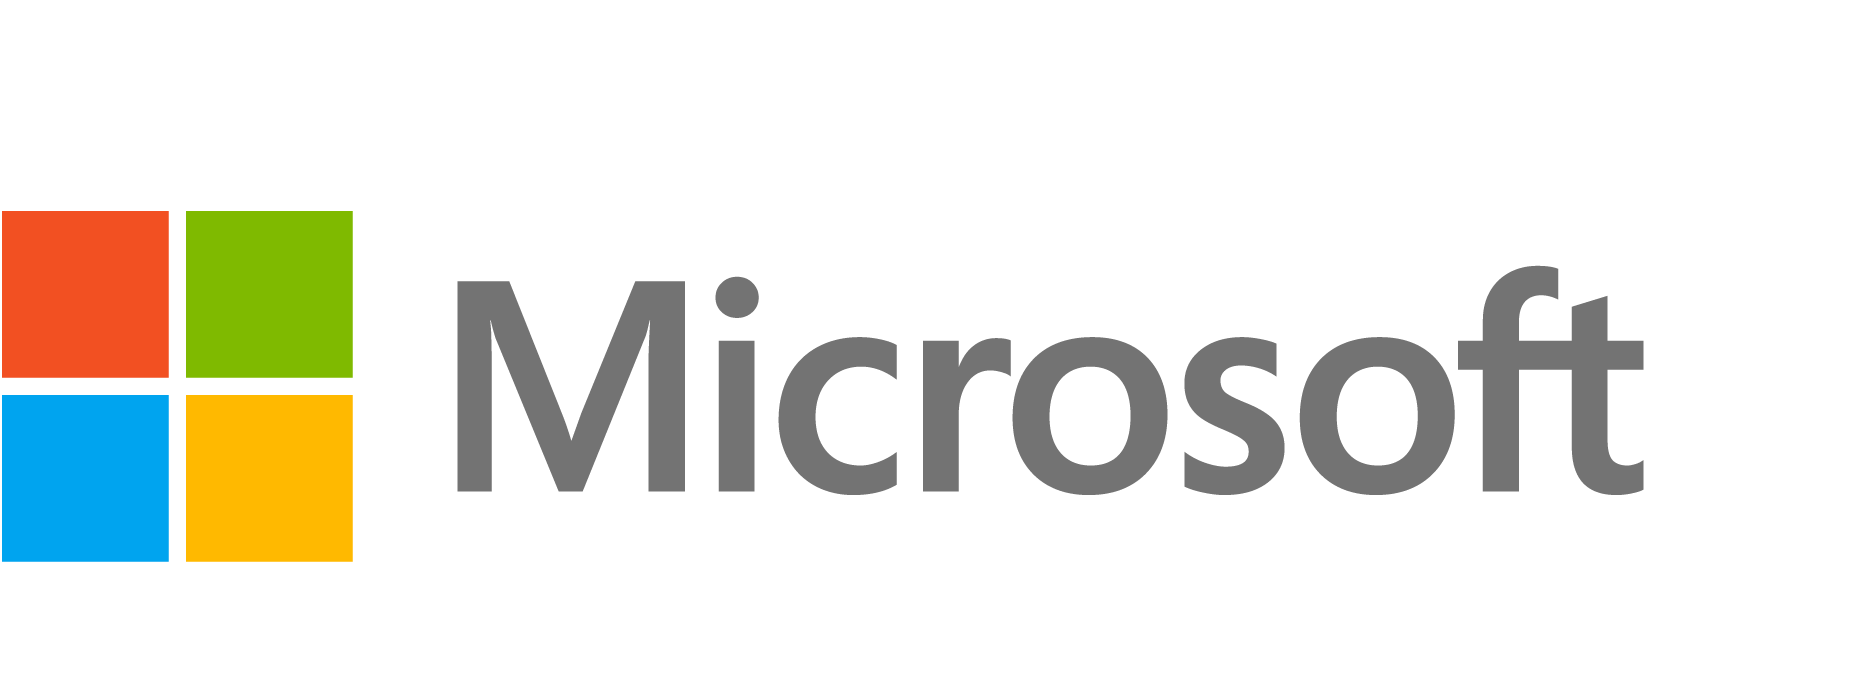 Microsoft logo PNG Image